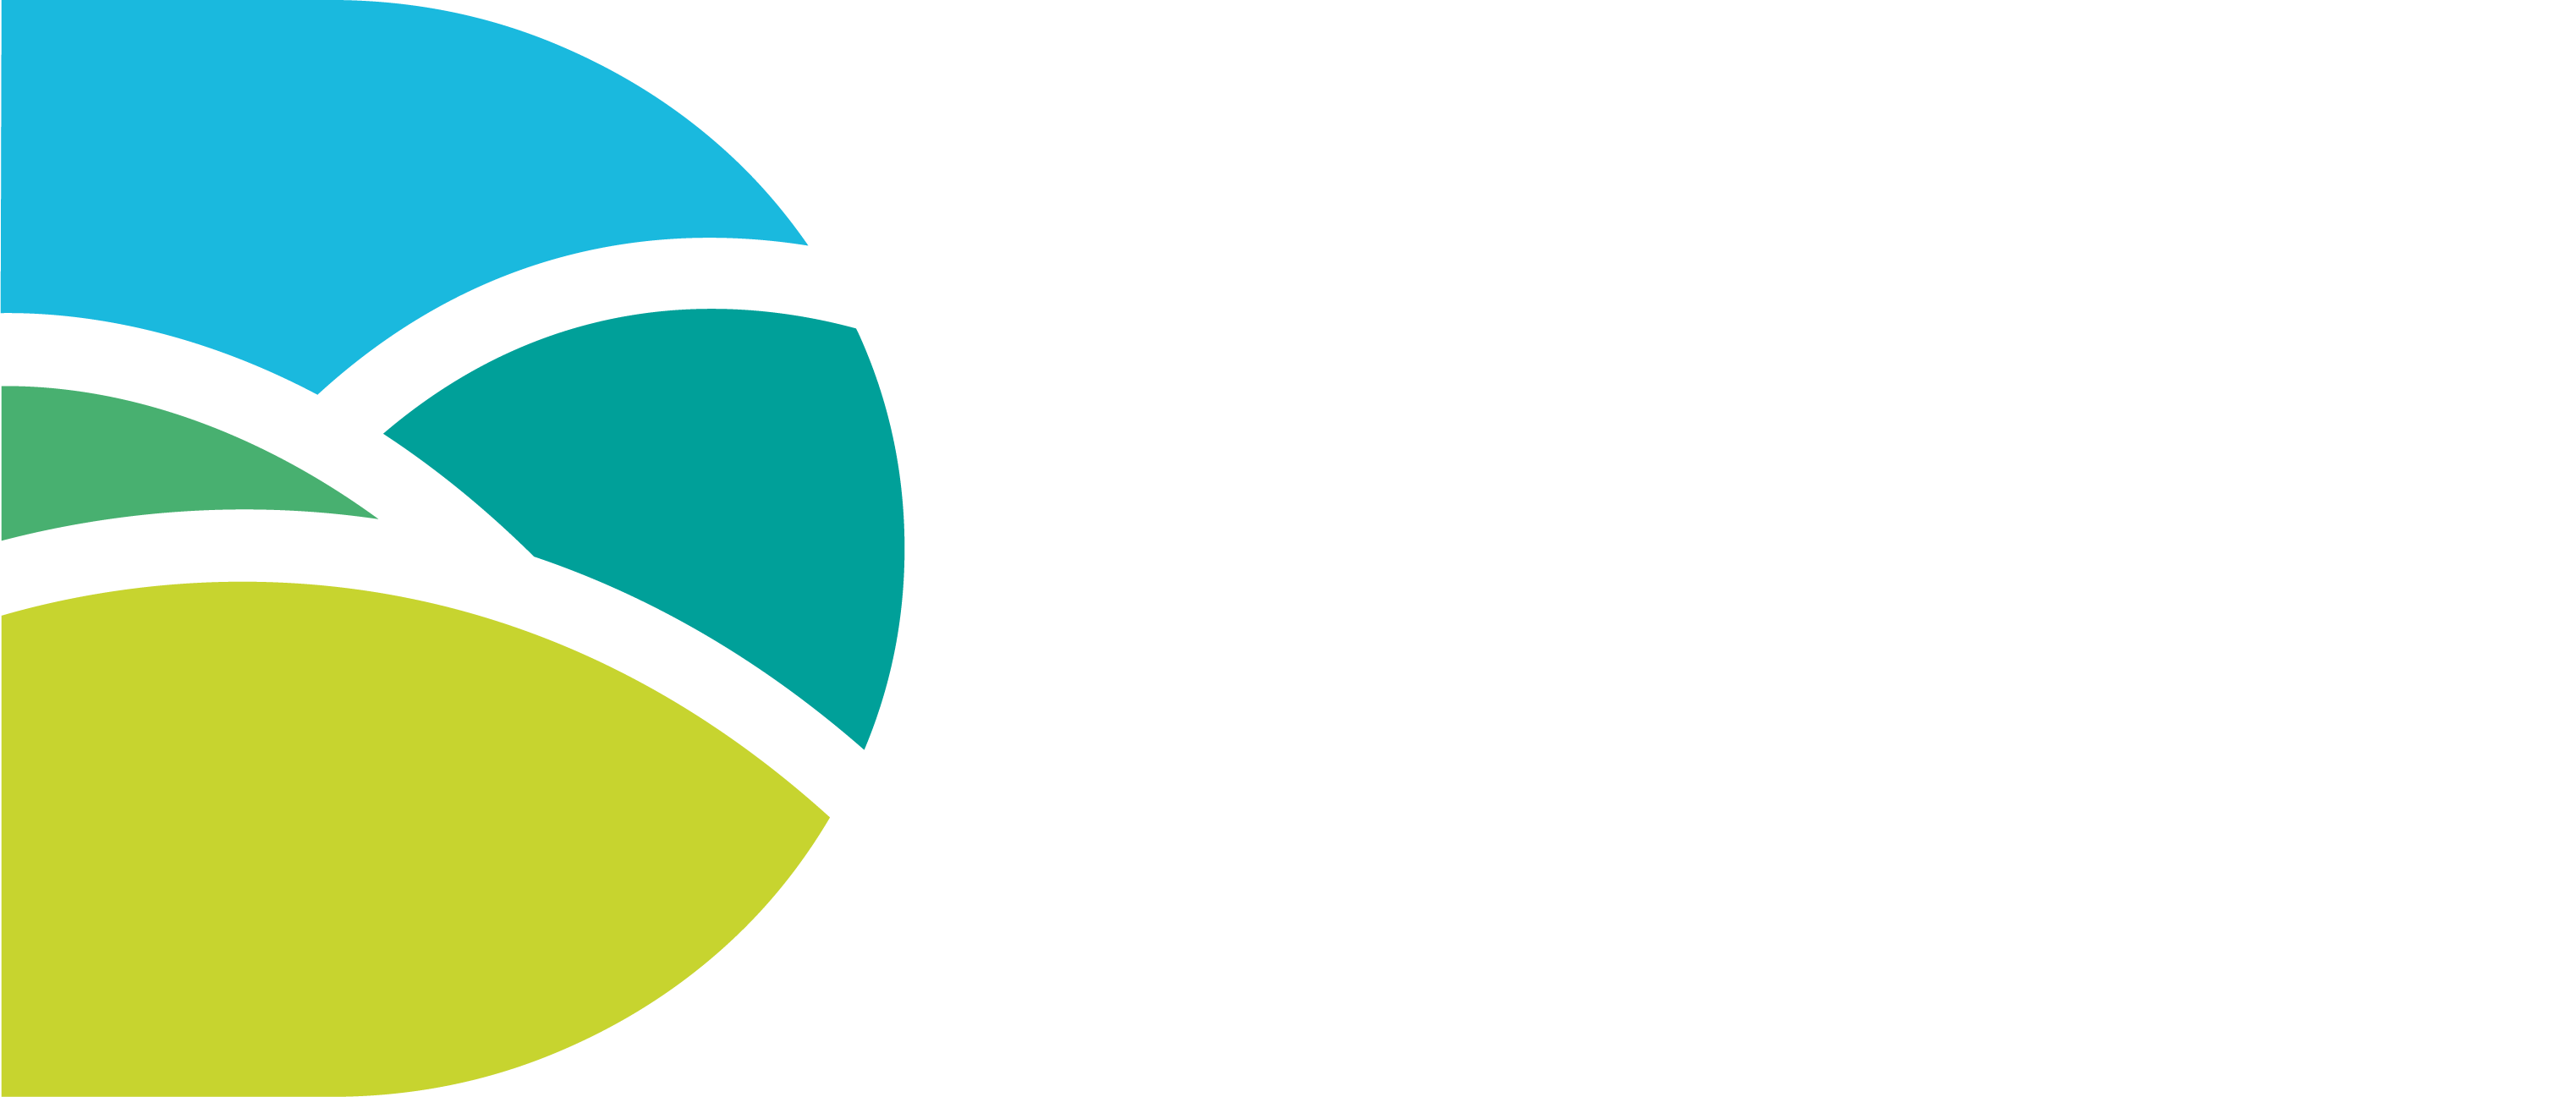 What different internet speeds mean - Dorset Council